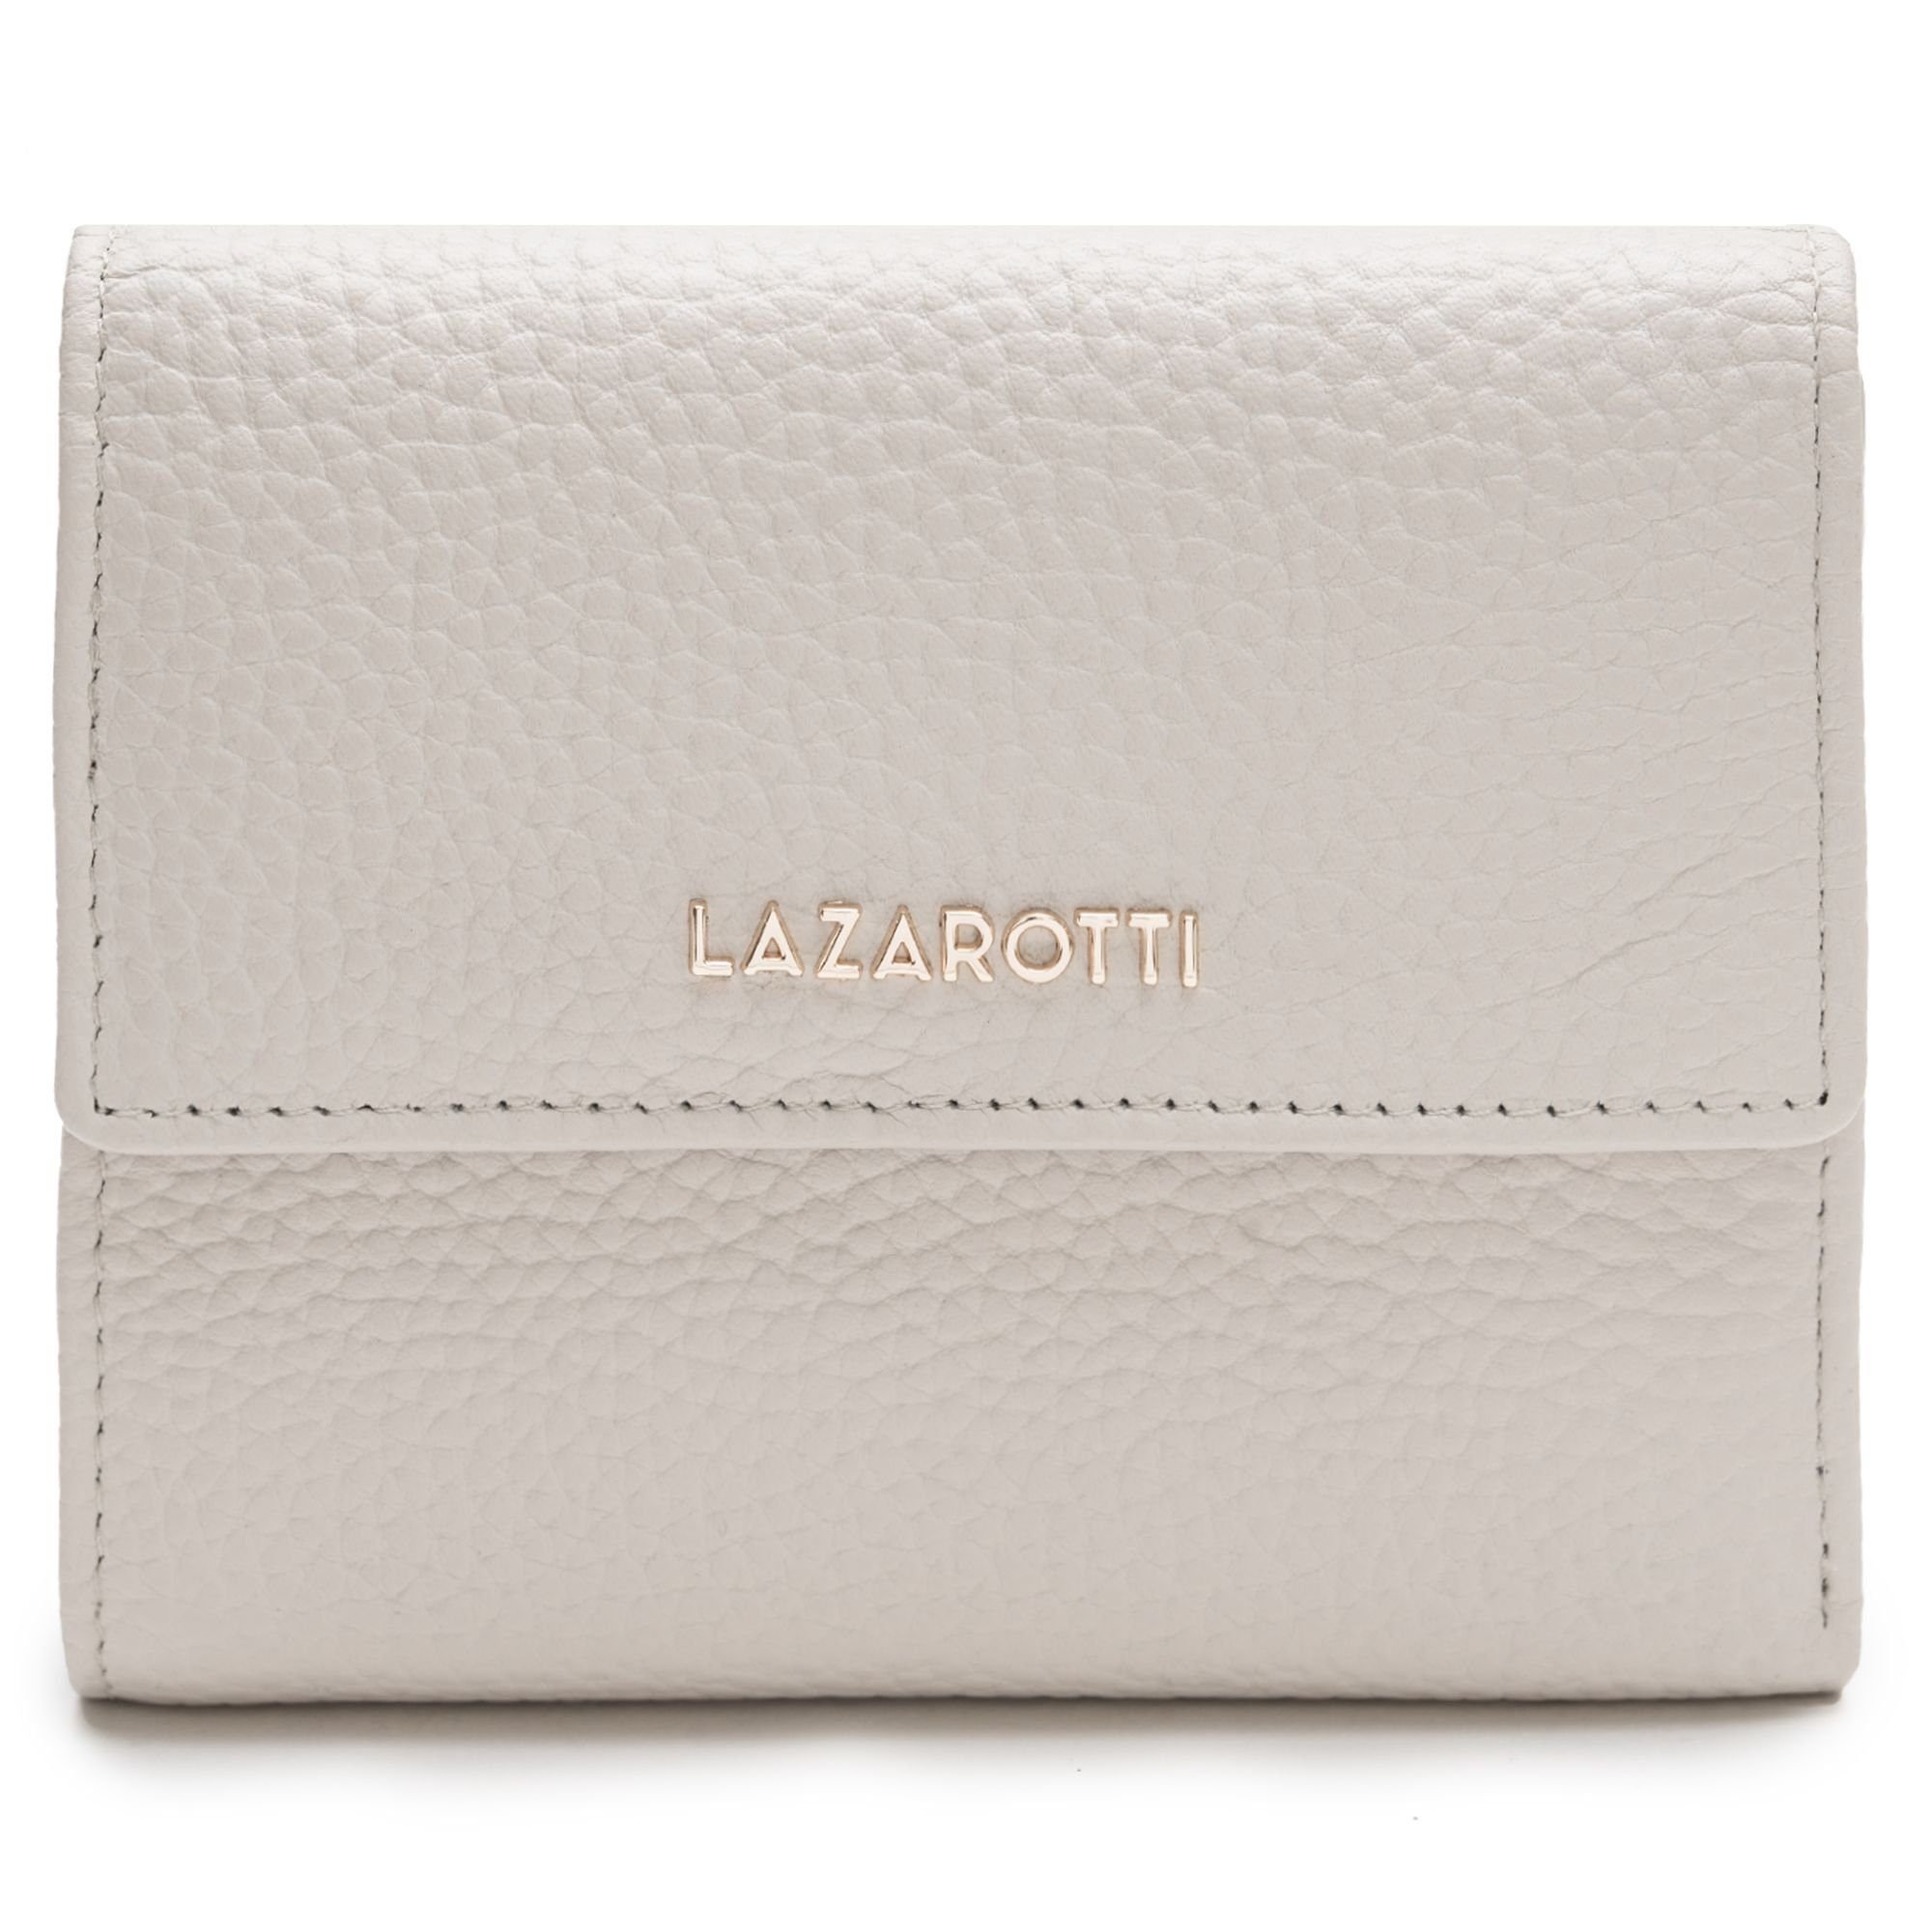 Leather, Bologna Lazarotti Leder Geldbörse offwhite